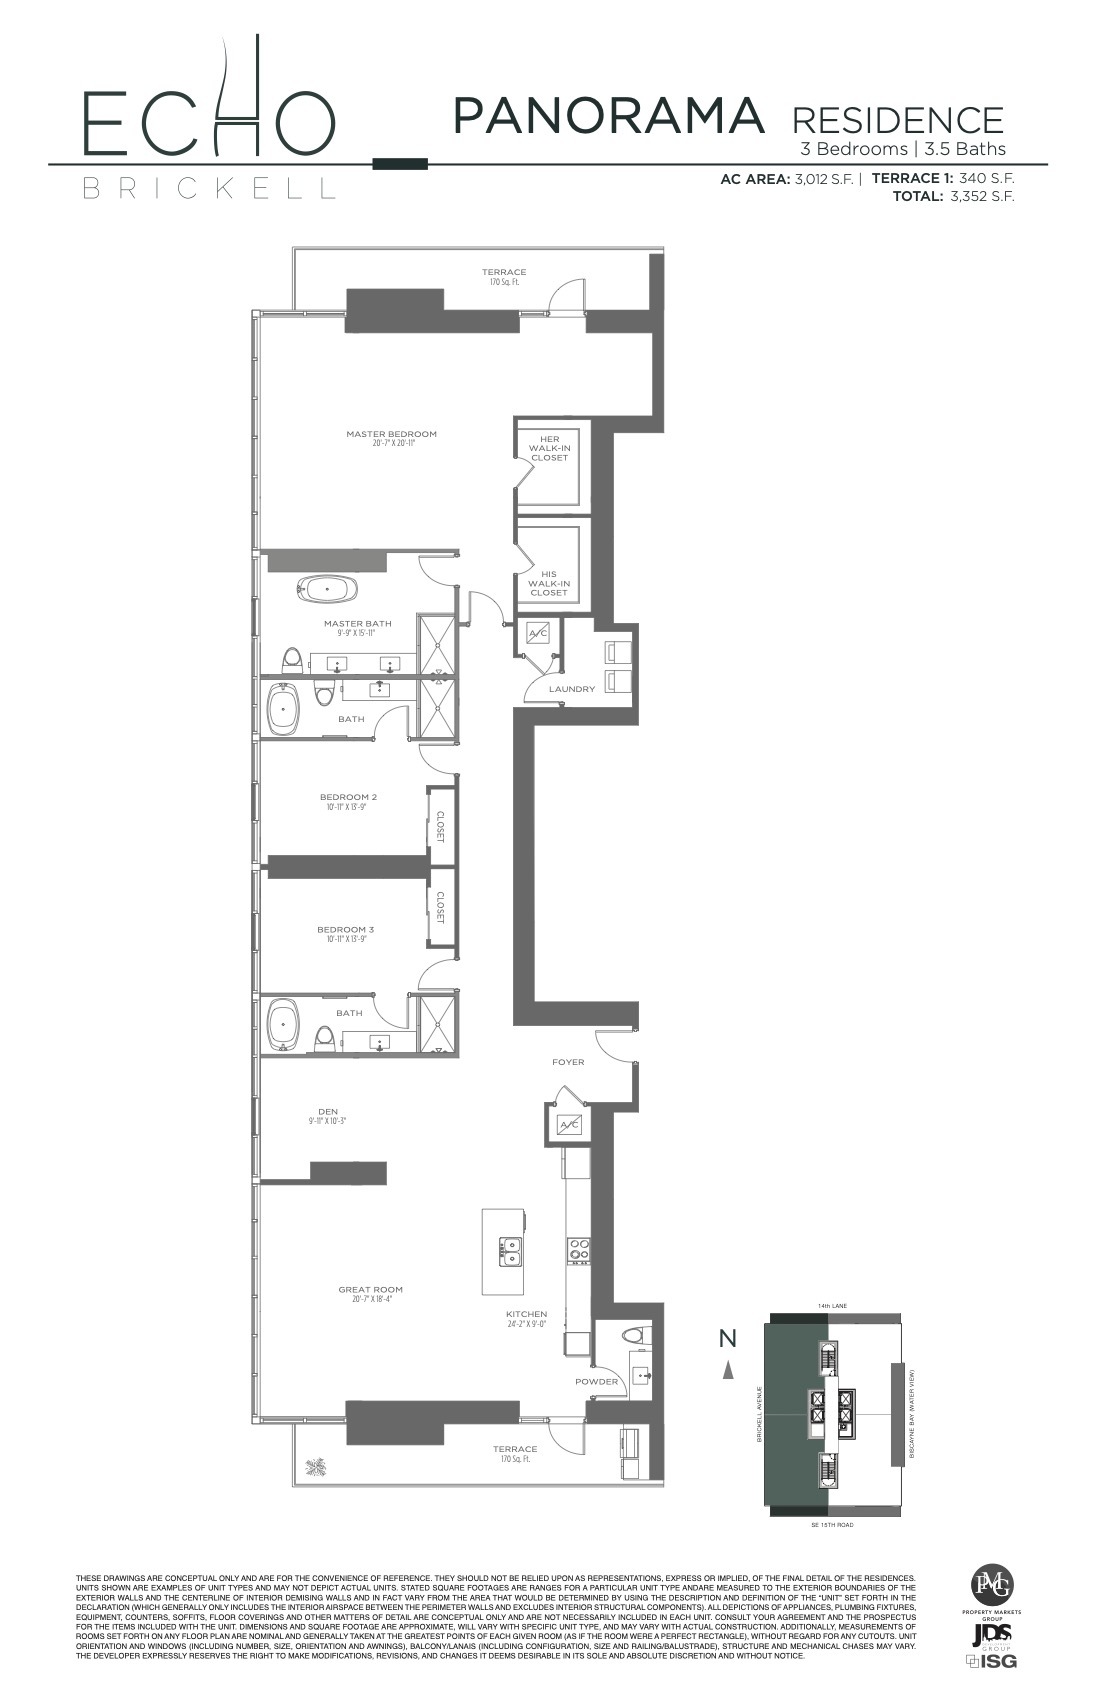 Floor Plan for Echo Brickell Floorplans, Panorama Residence